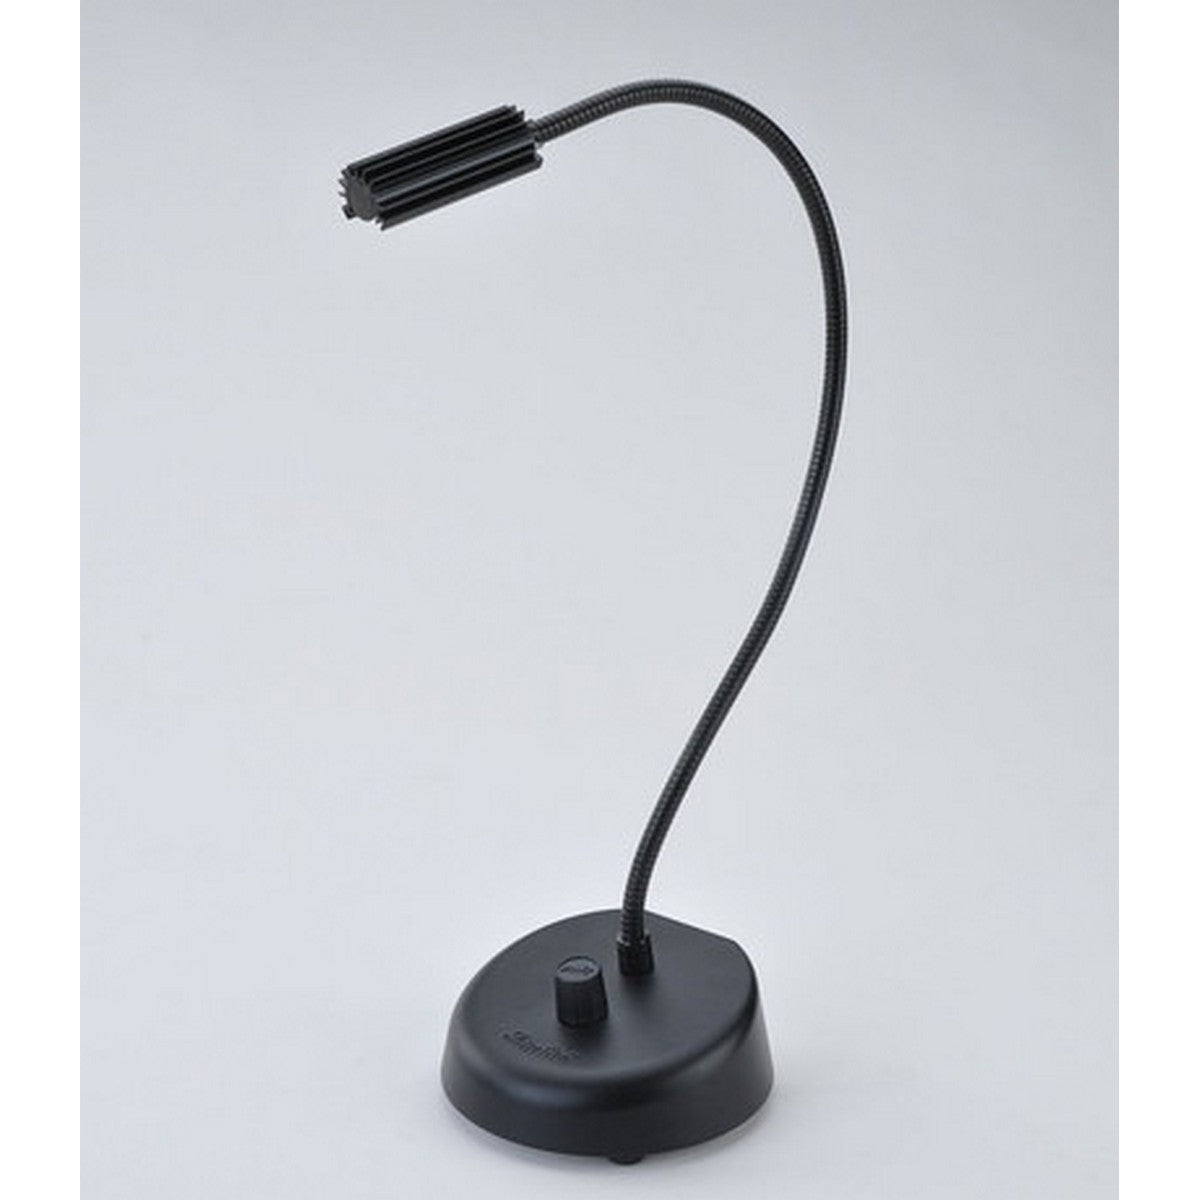 Littlite LW-18-HI | High Intensity Desk Light with Dimmer 18 inch  gooseneck